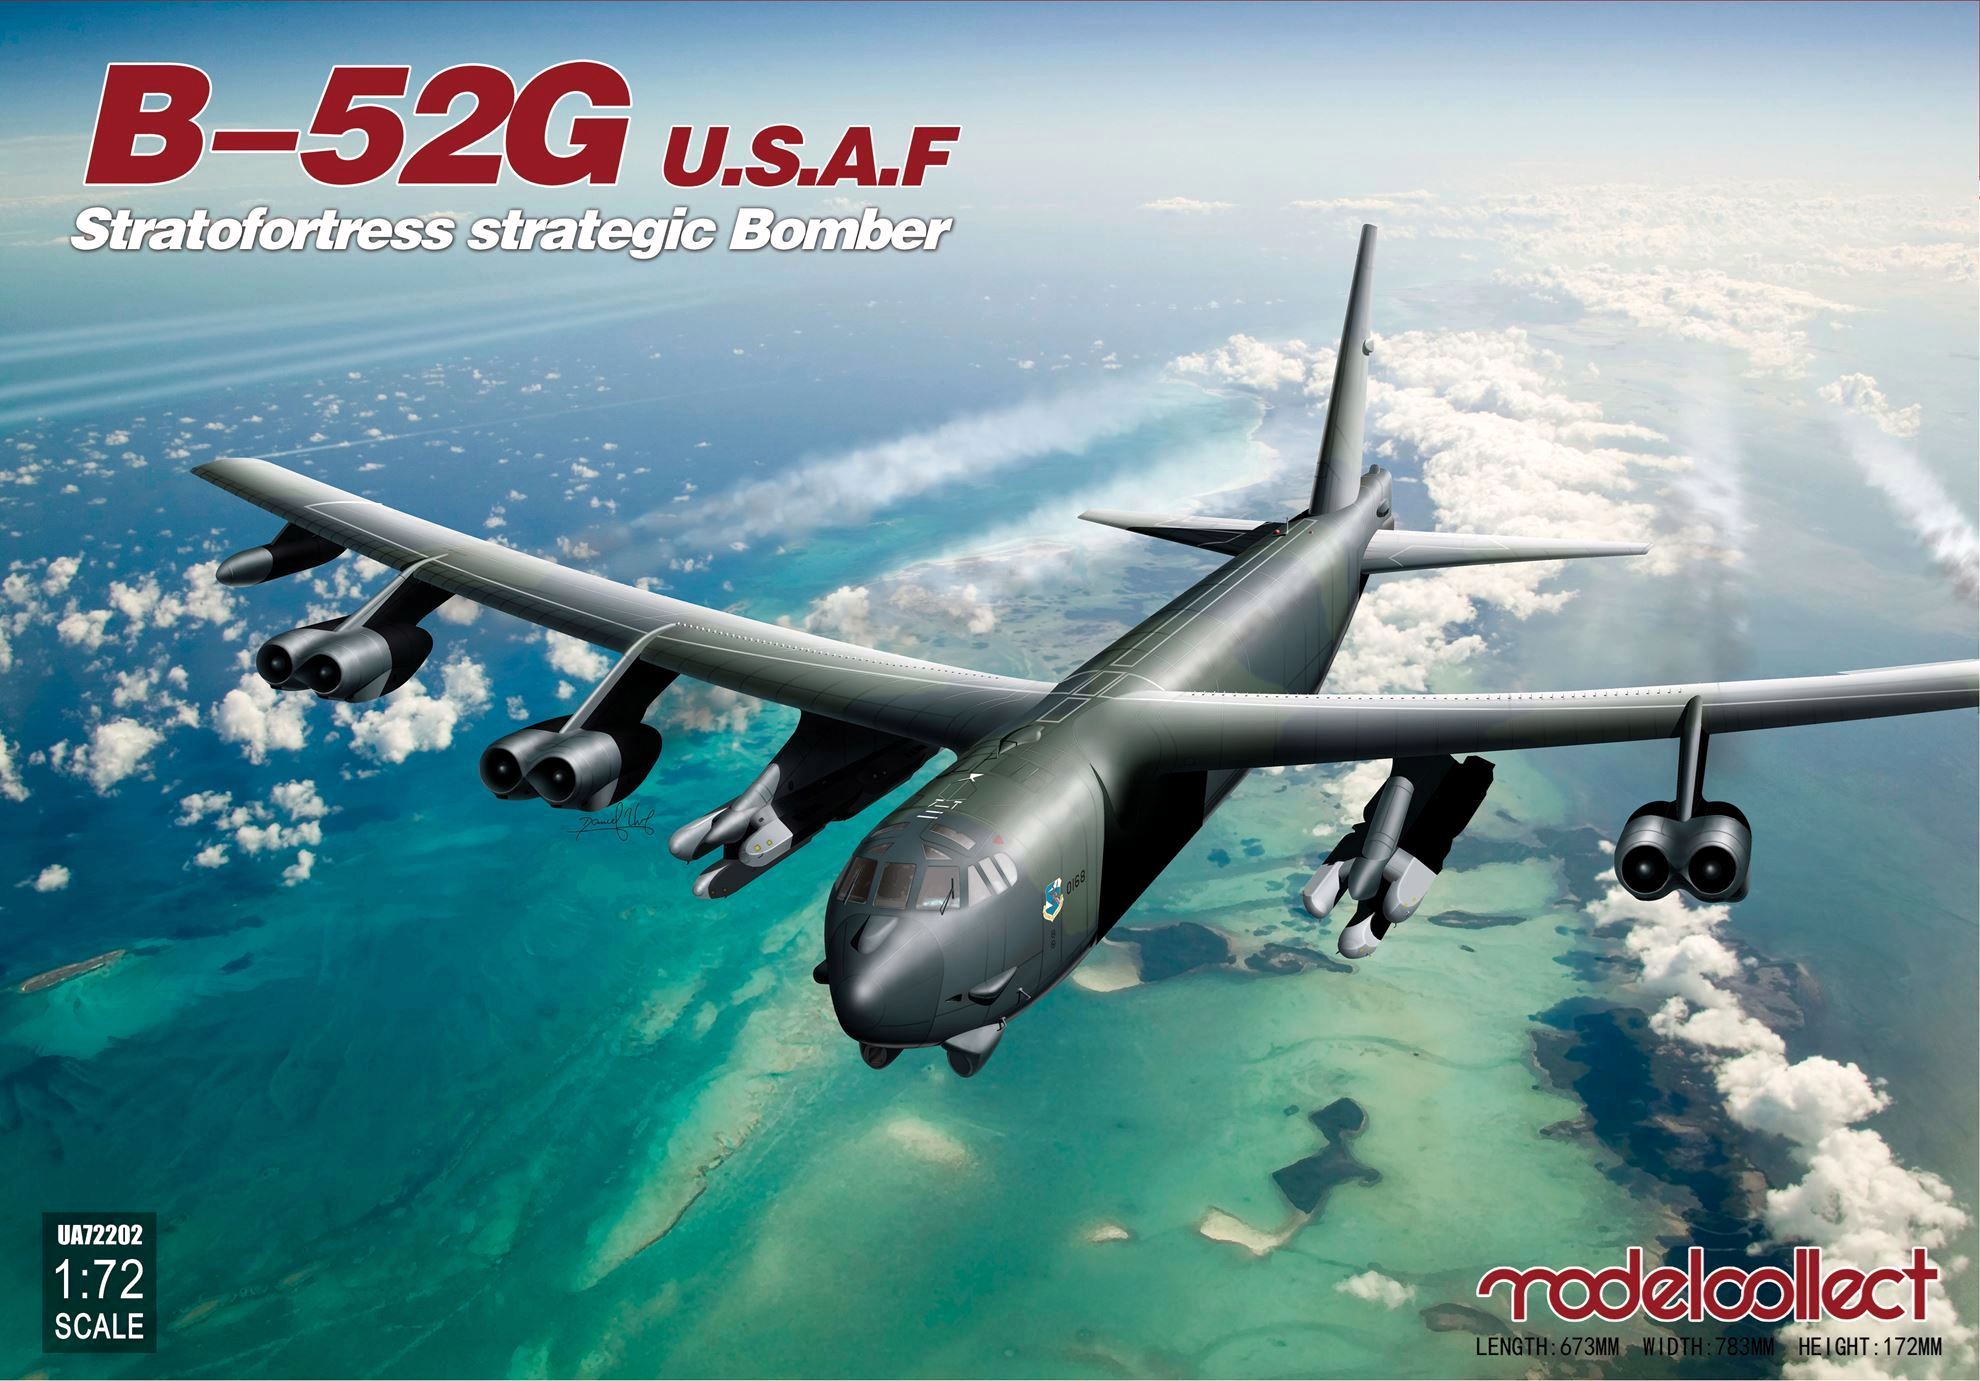 USAF B-52G Stratofortress strategic Bomber